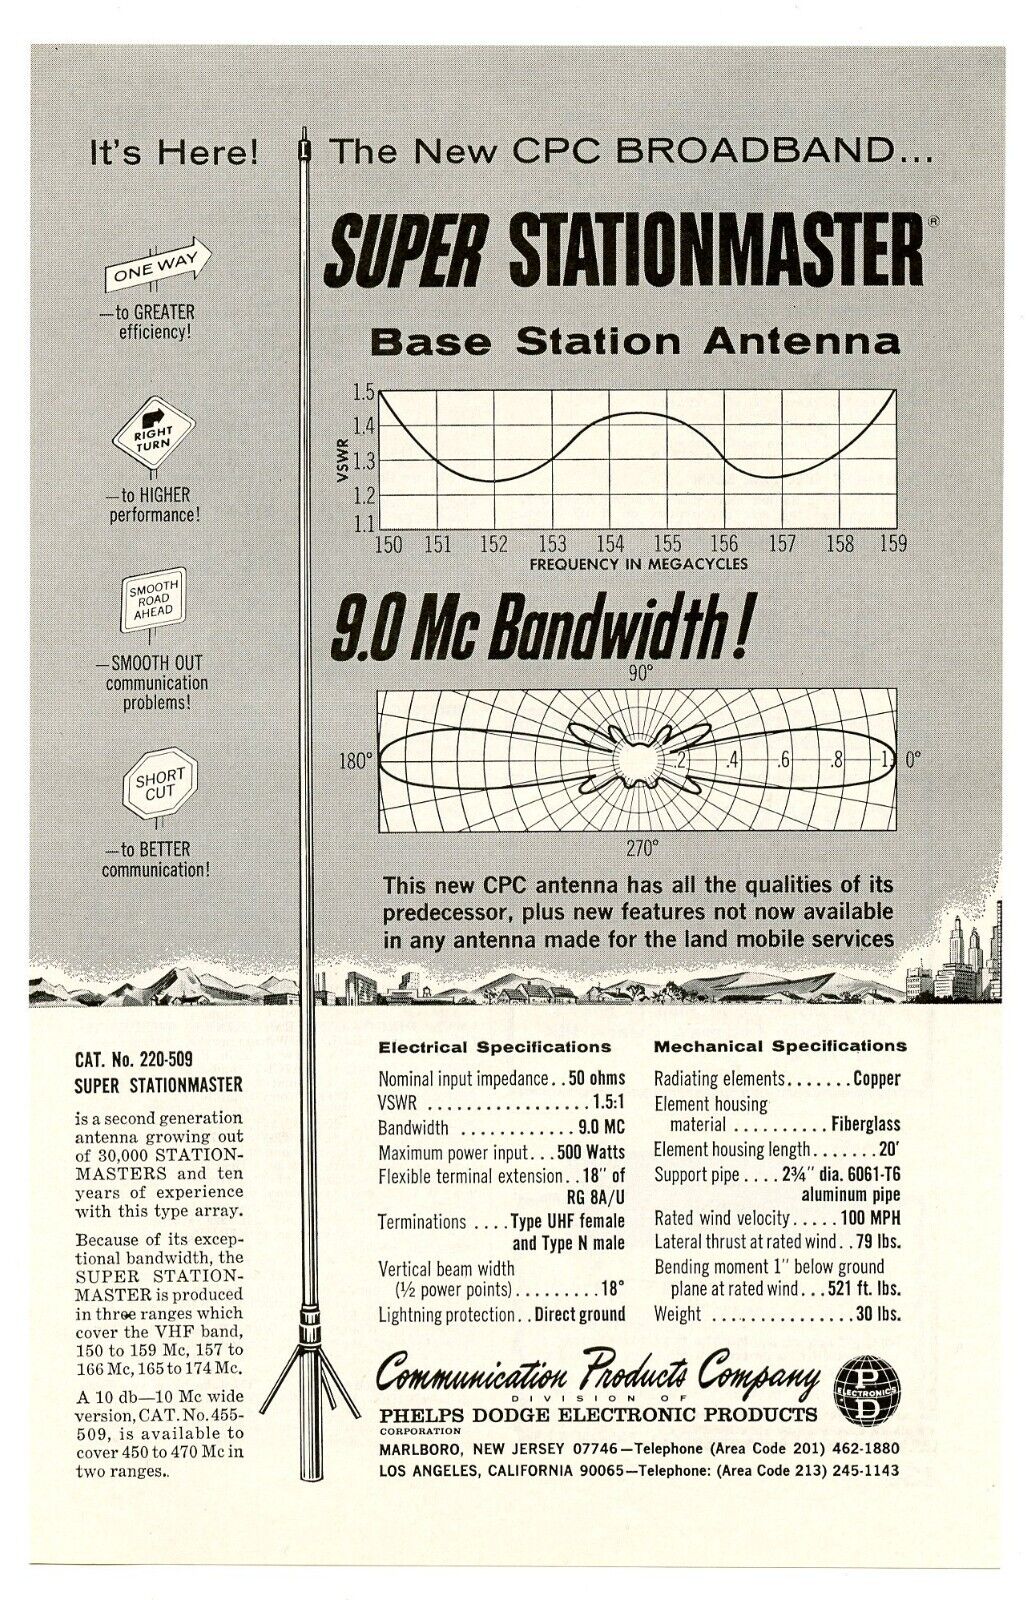 QST Ham Radio Mag. Ad SUPER STATIONMASTER 9.0 Mc Bandwidth from CPC (2/66)